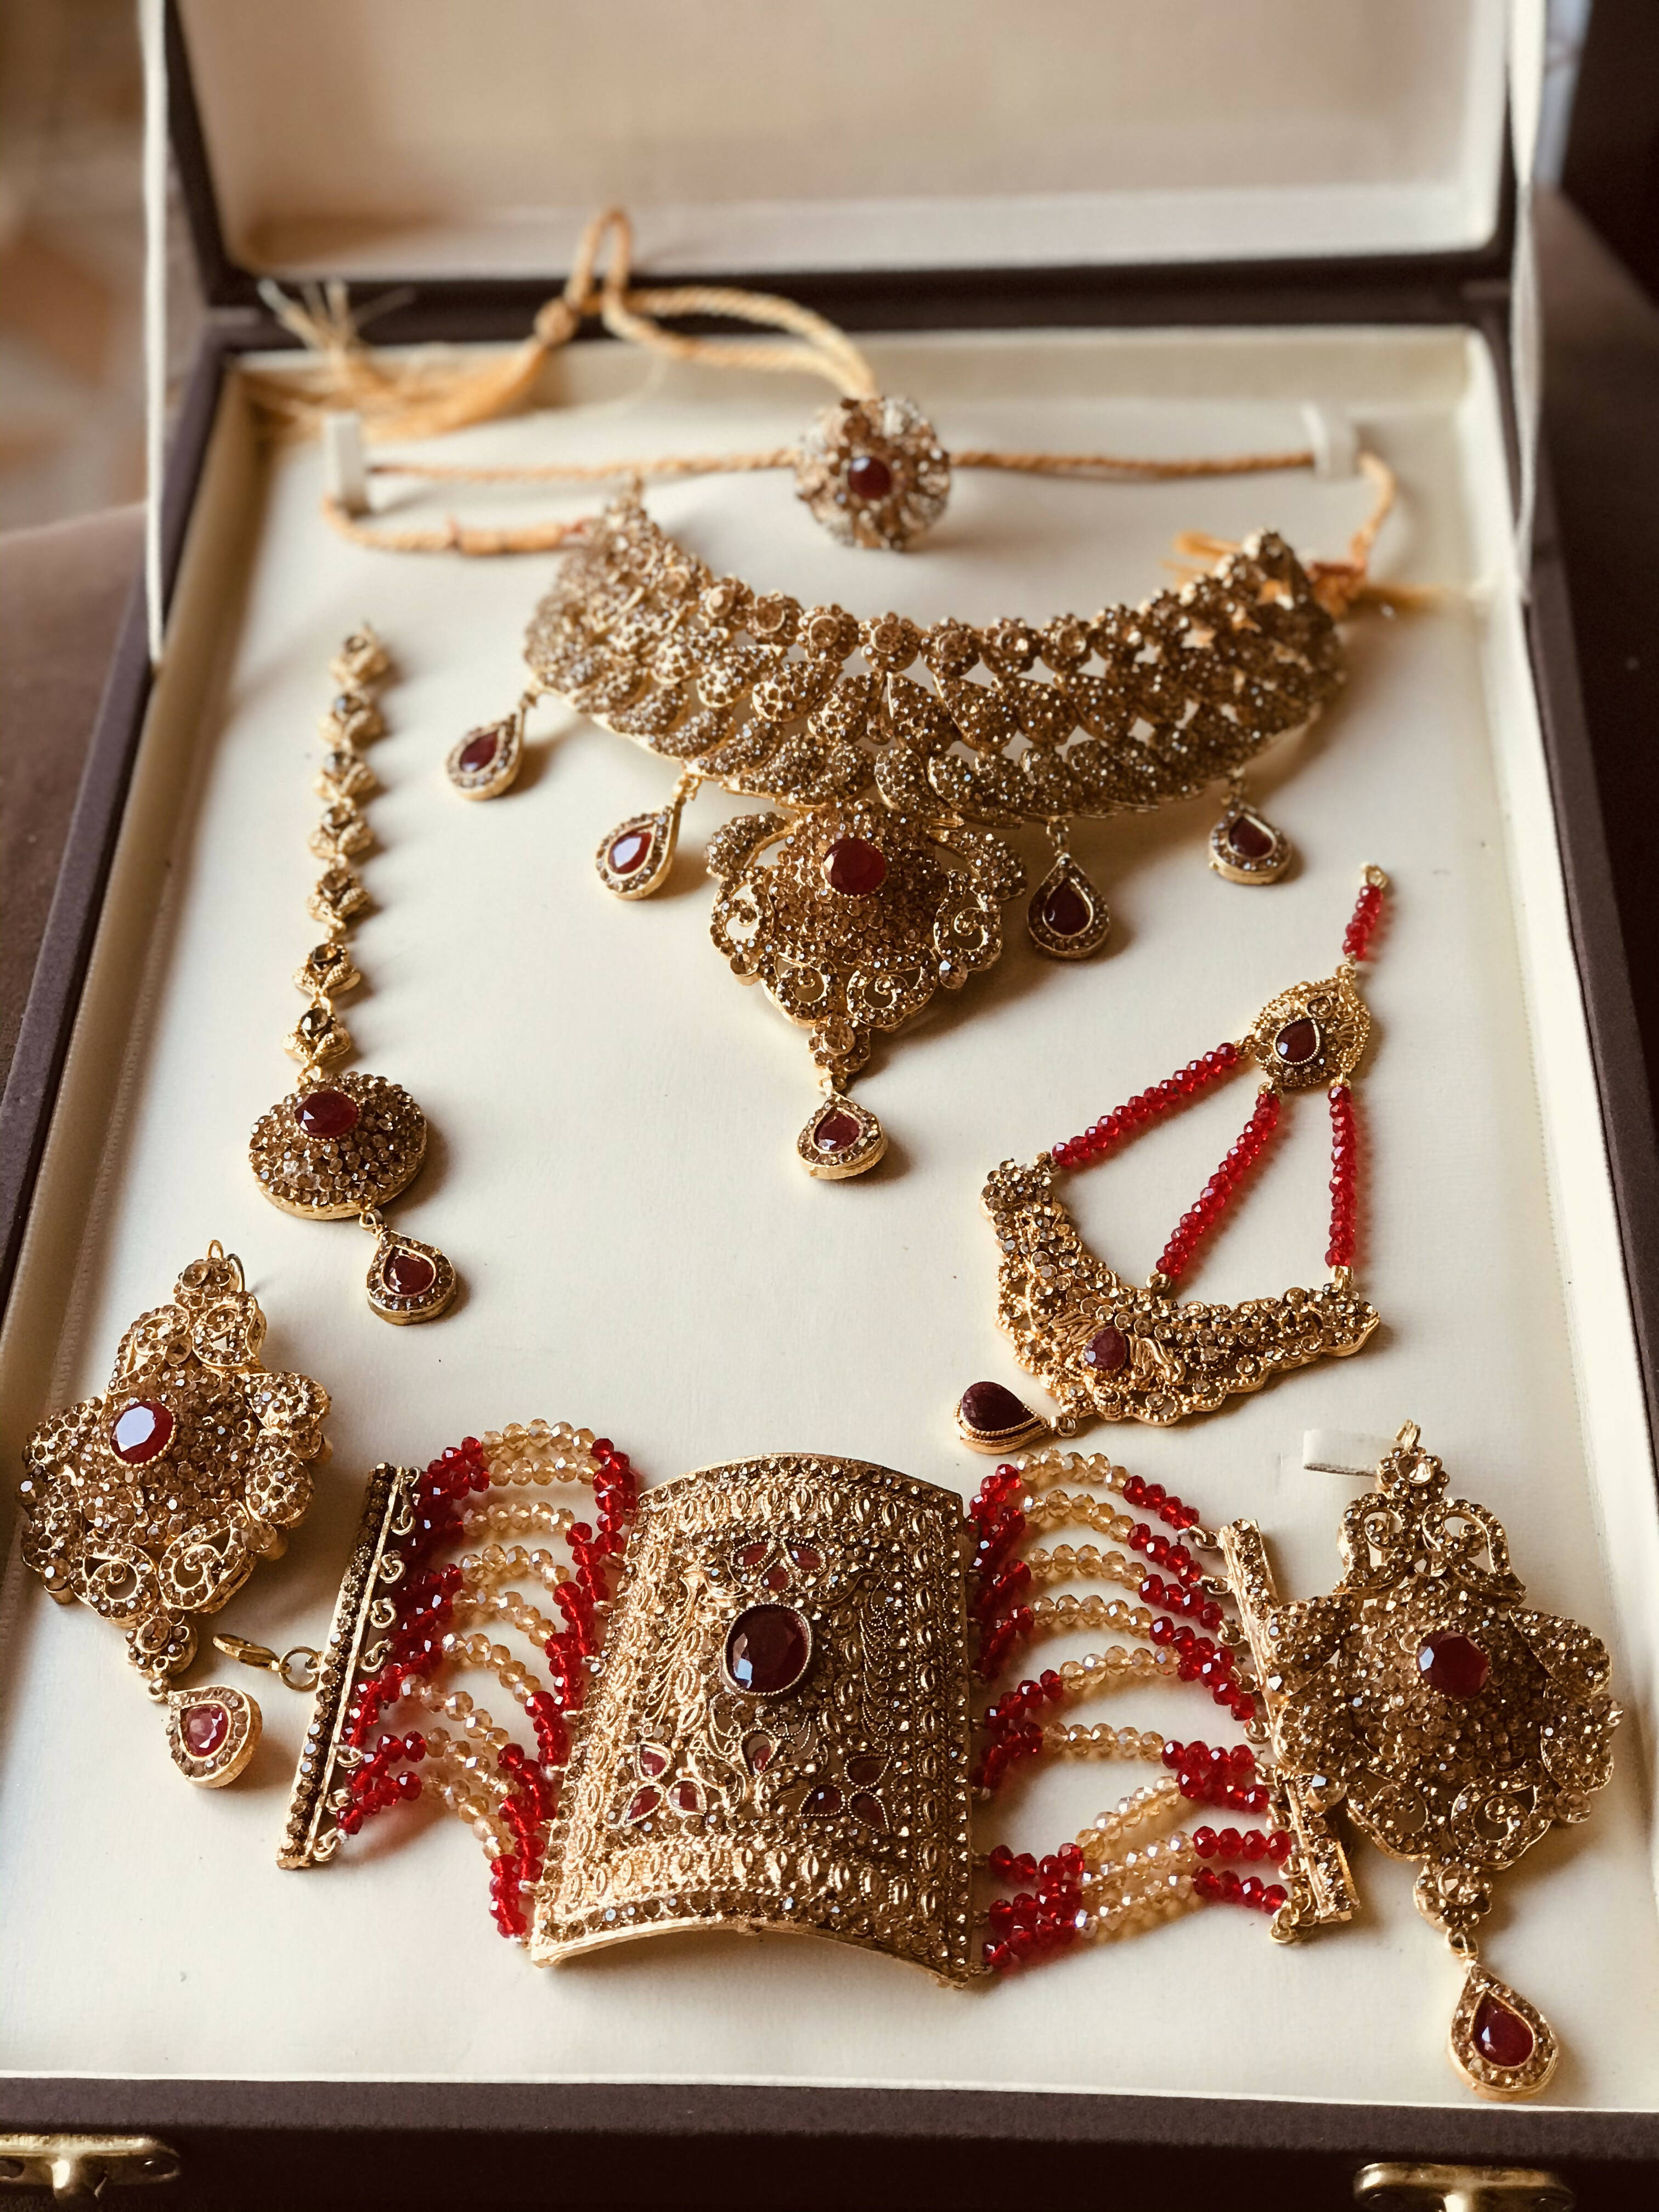 Zeenat jewelry | Reg & Golden Bridal Jewelry Set | Women Wedding Jewelry & Sets | Worn Once